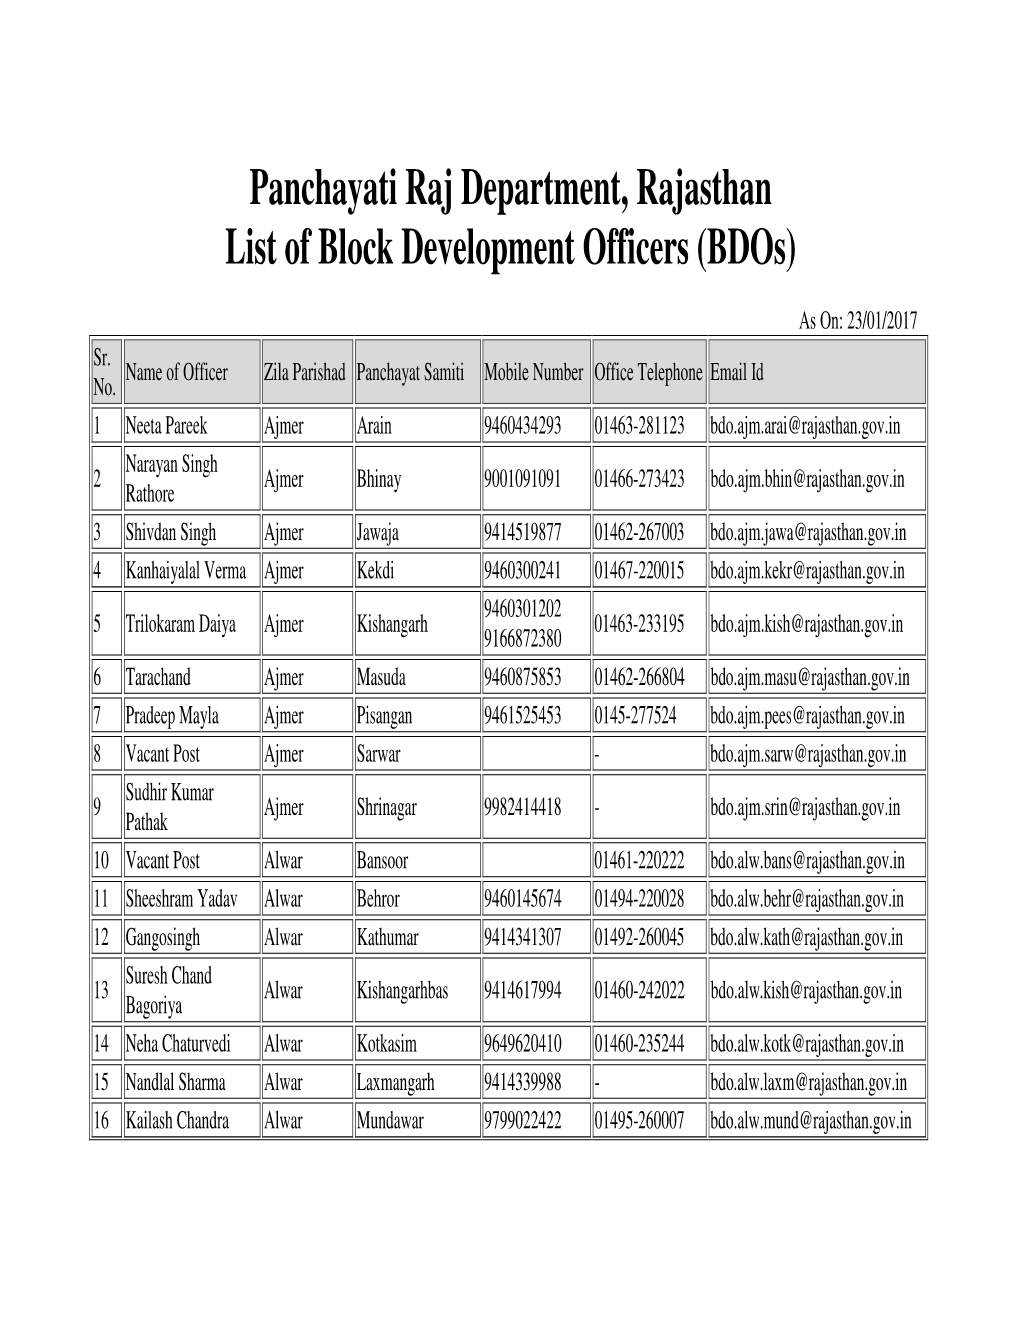 Panchayati Raj Department, Rajasthan List of Block Development Officers (Bdos)